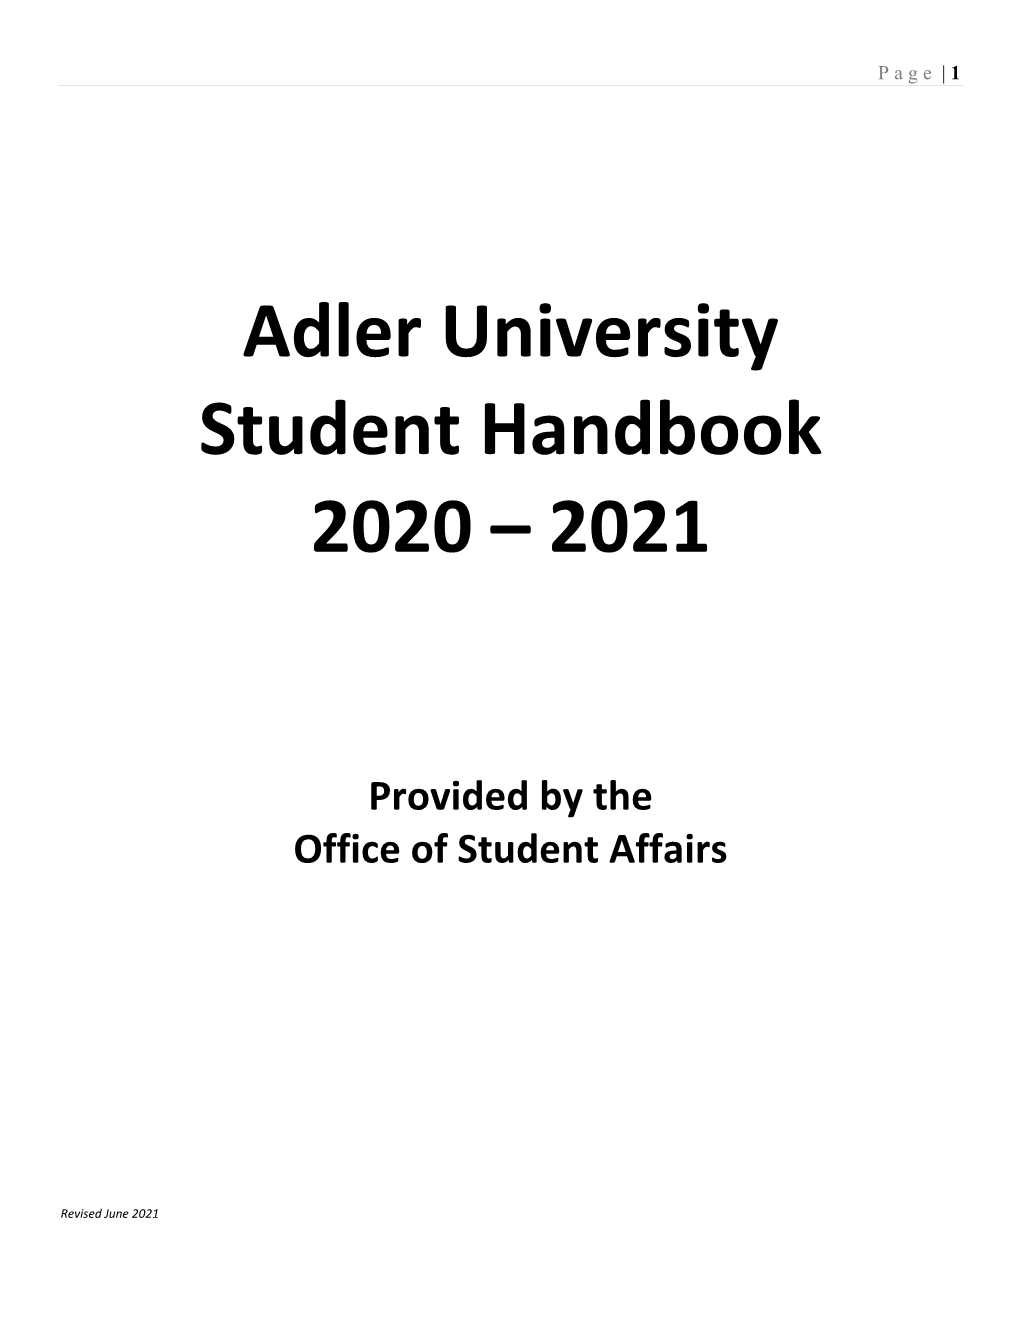 Adler University Student Handbook 2020 – 2021